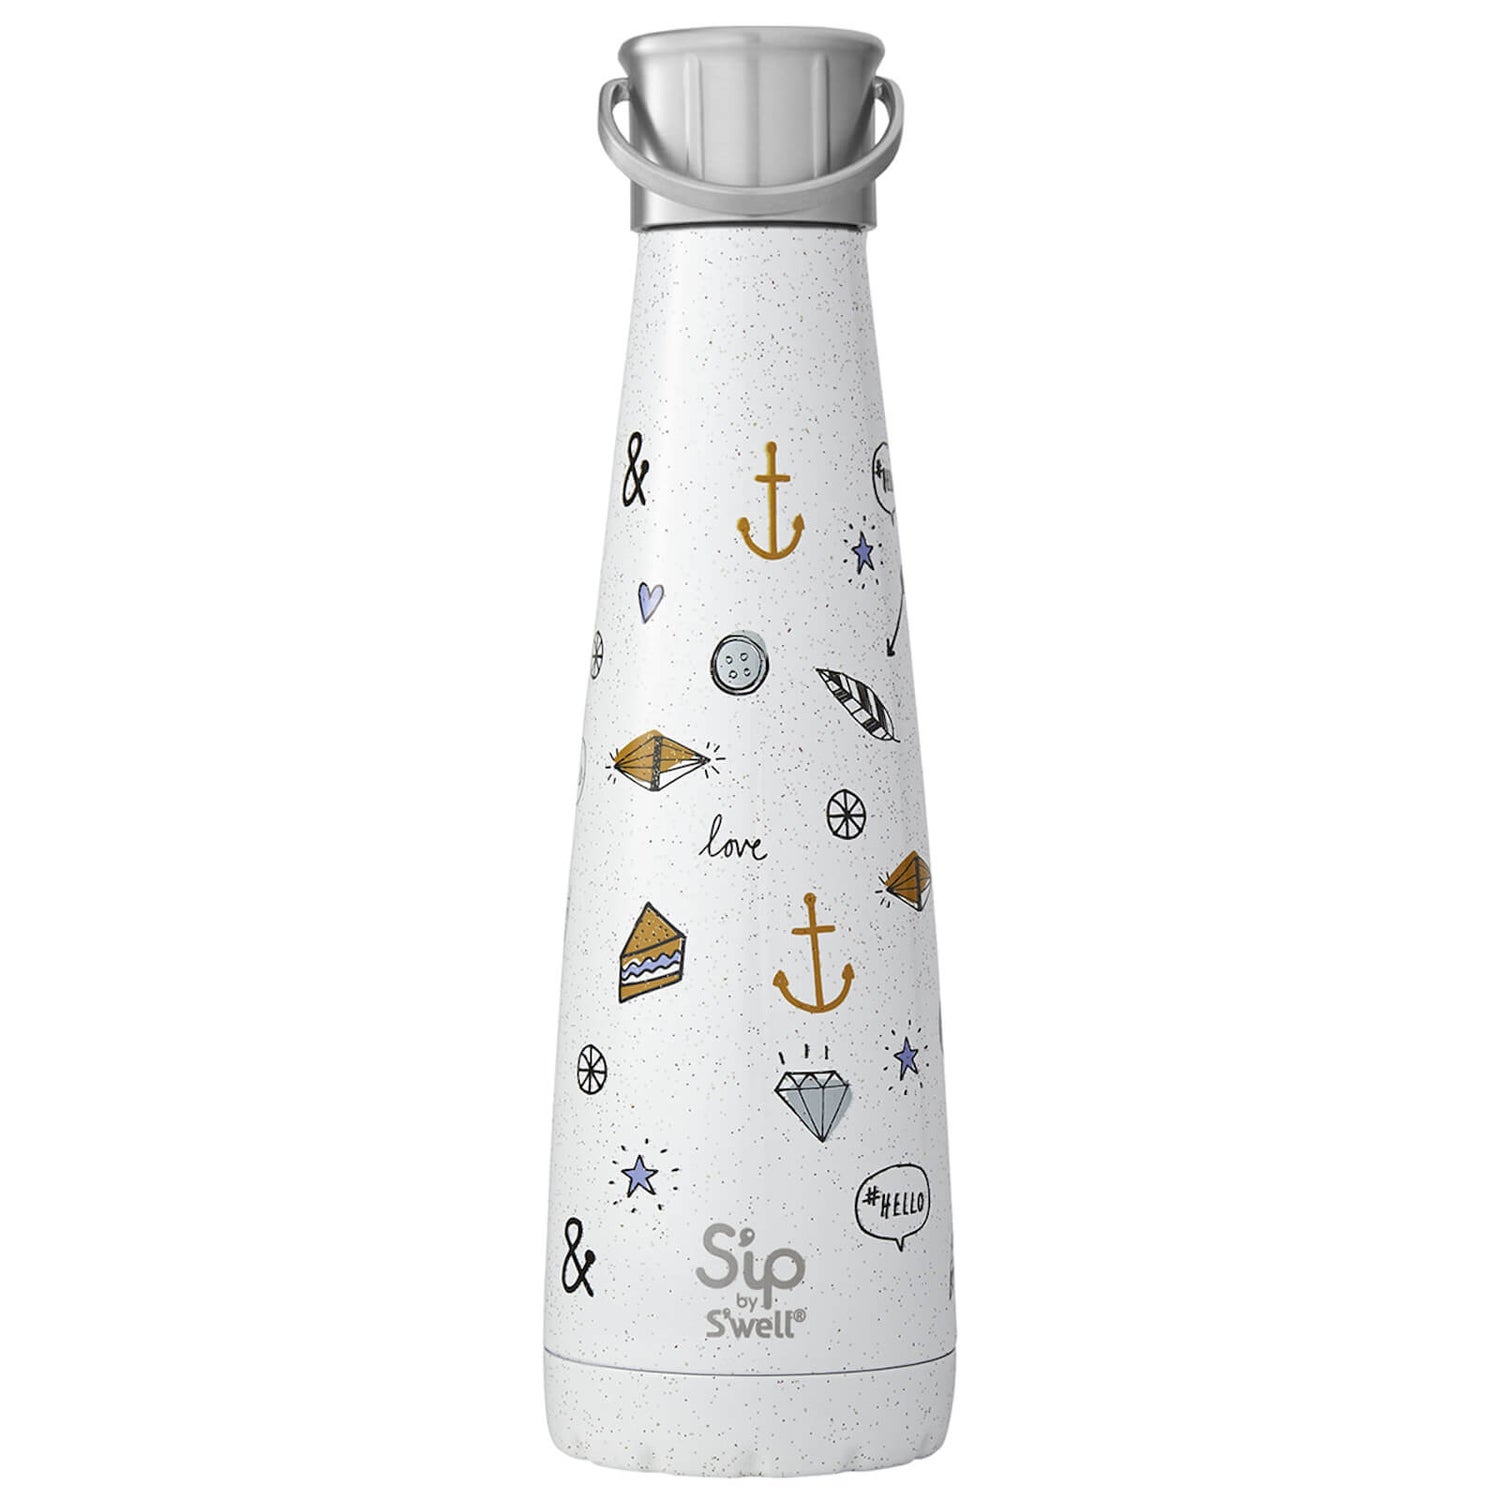 S'ip by S'well Bling Adventure Cap Water Bottle - 450ml